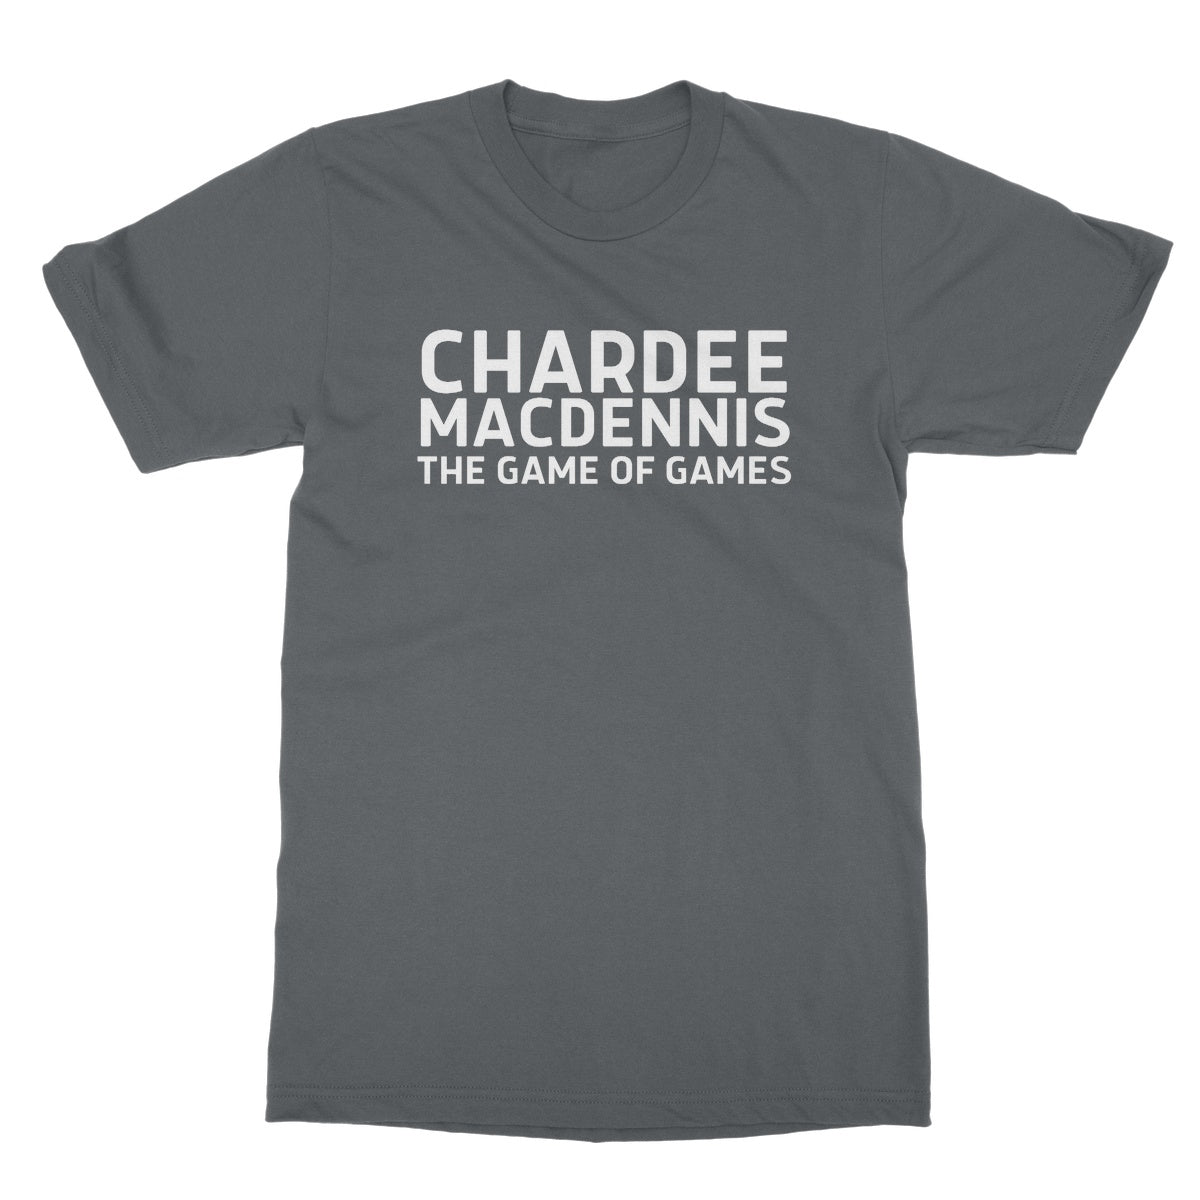 chardee macdennis t shirt grey